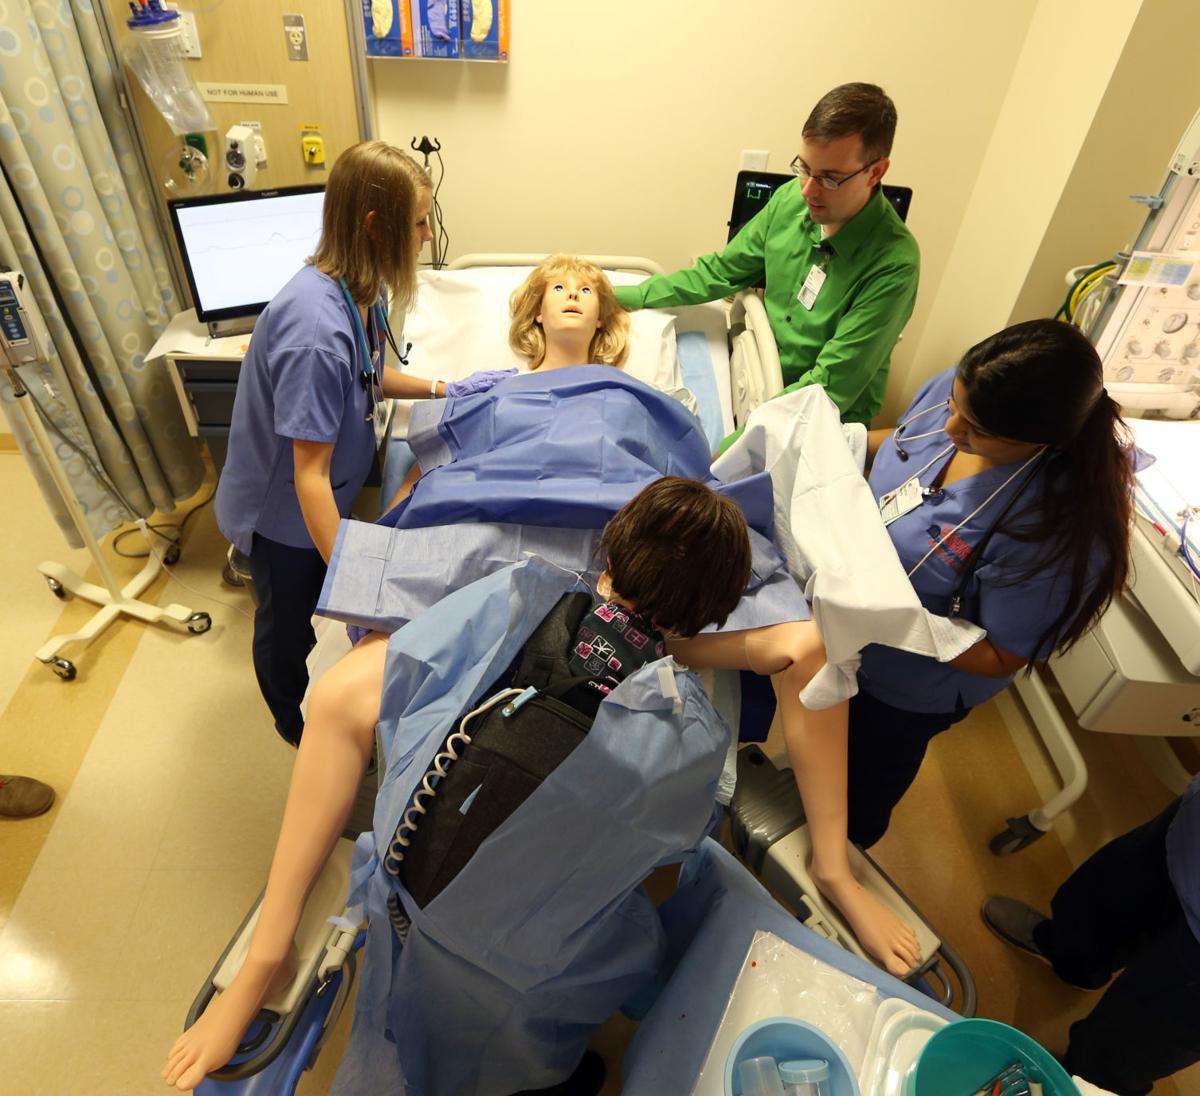 robot offers unique experience for UVa nurses in training